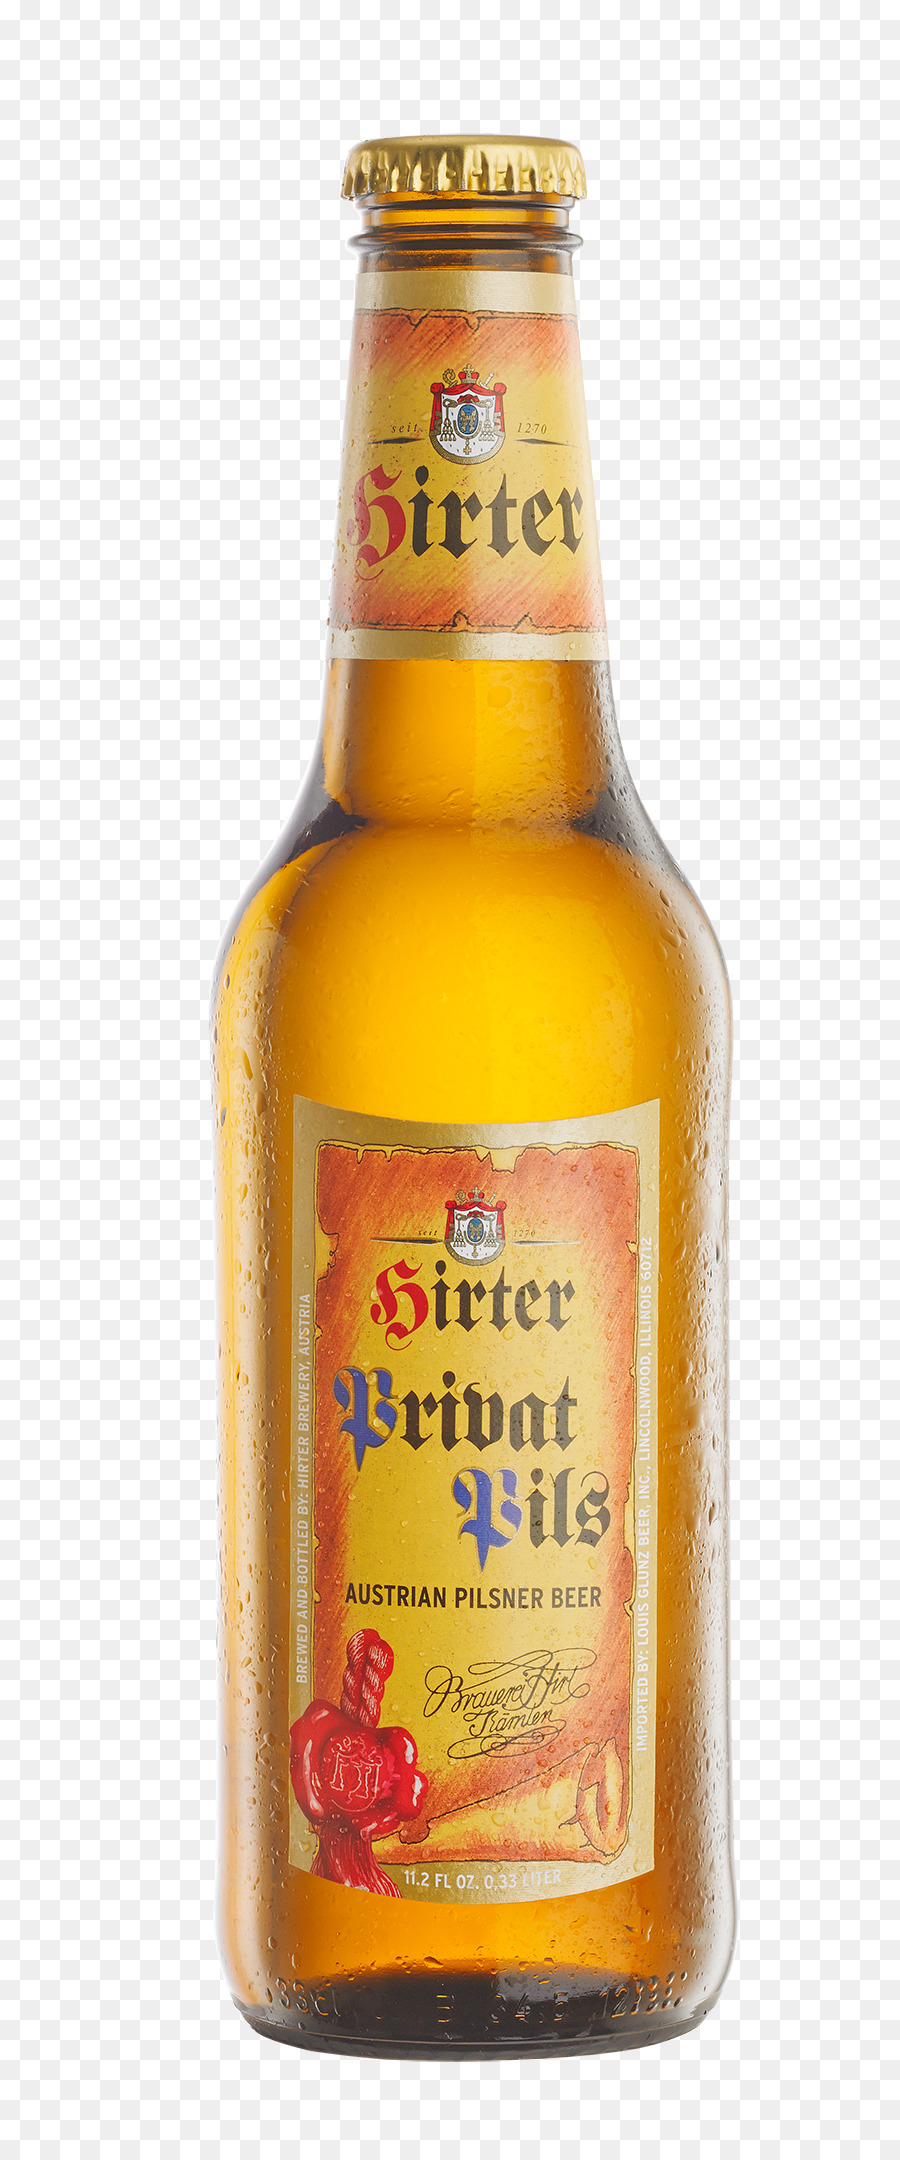 Birra Hirter Privat Pils Pilsner - Birra